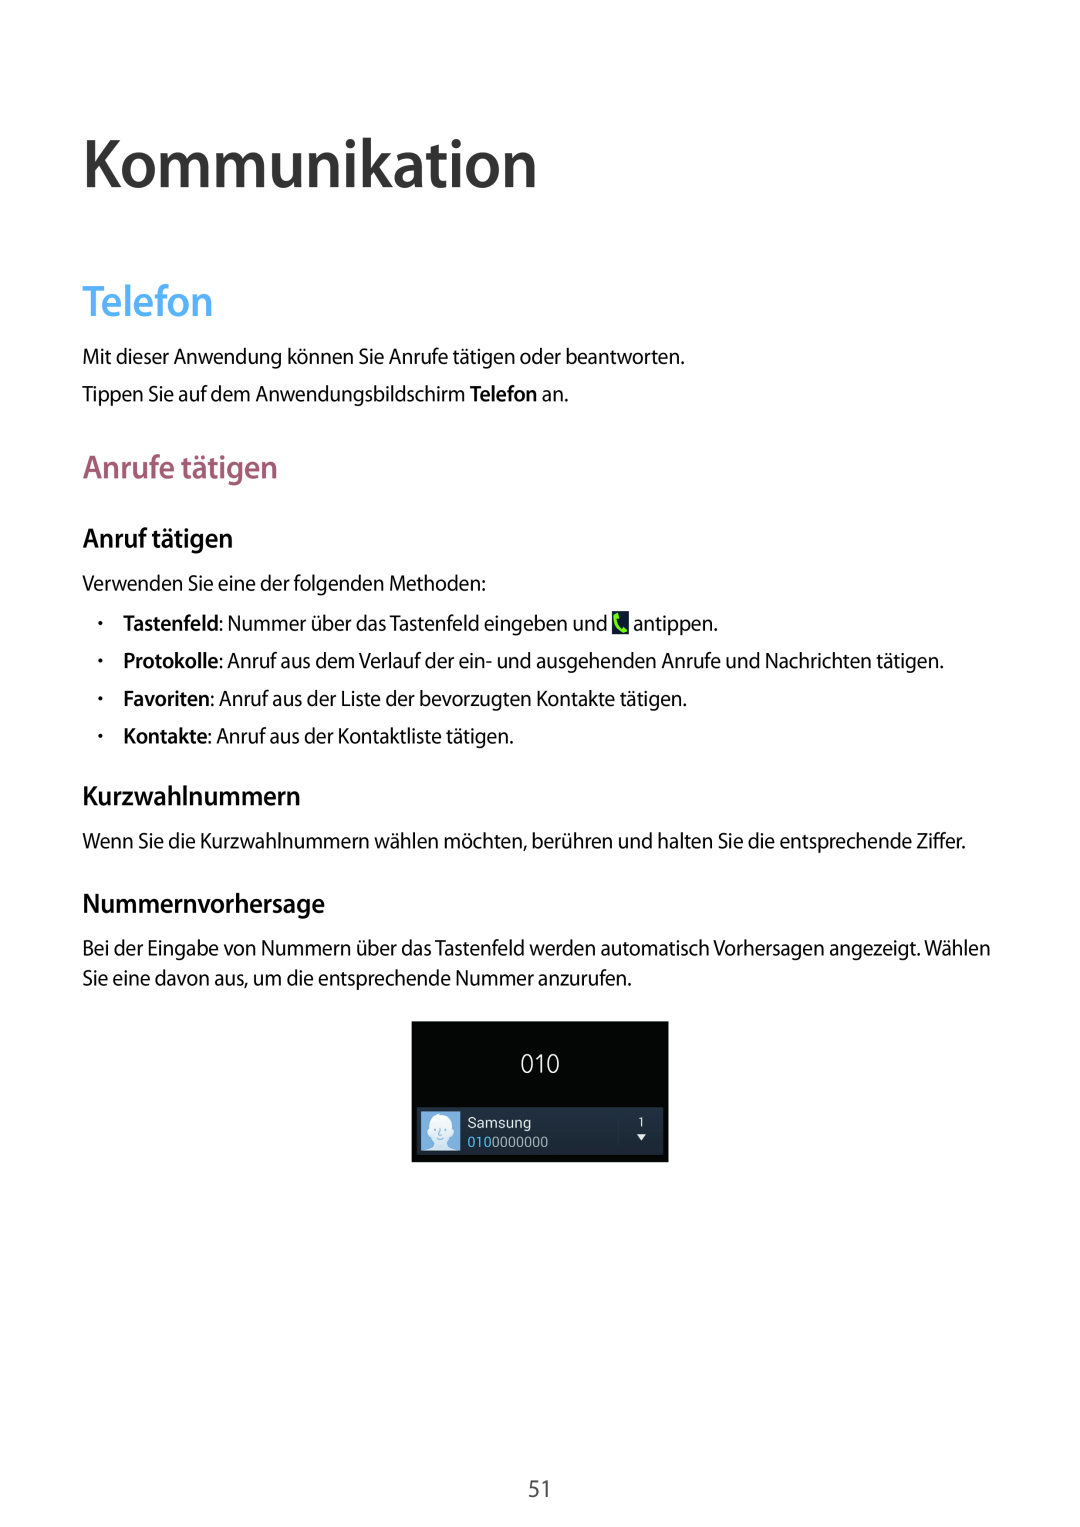 Samsung GT-I9505ZBADBT manual Kommunikation, Telefon, Anrufe tätigen, Anruf tätigen, Kurzwahlnummern, Nummernvorhersage 